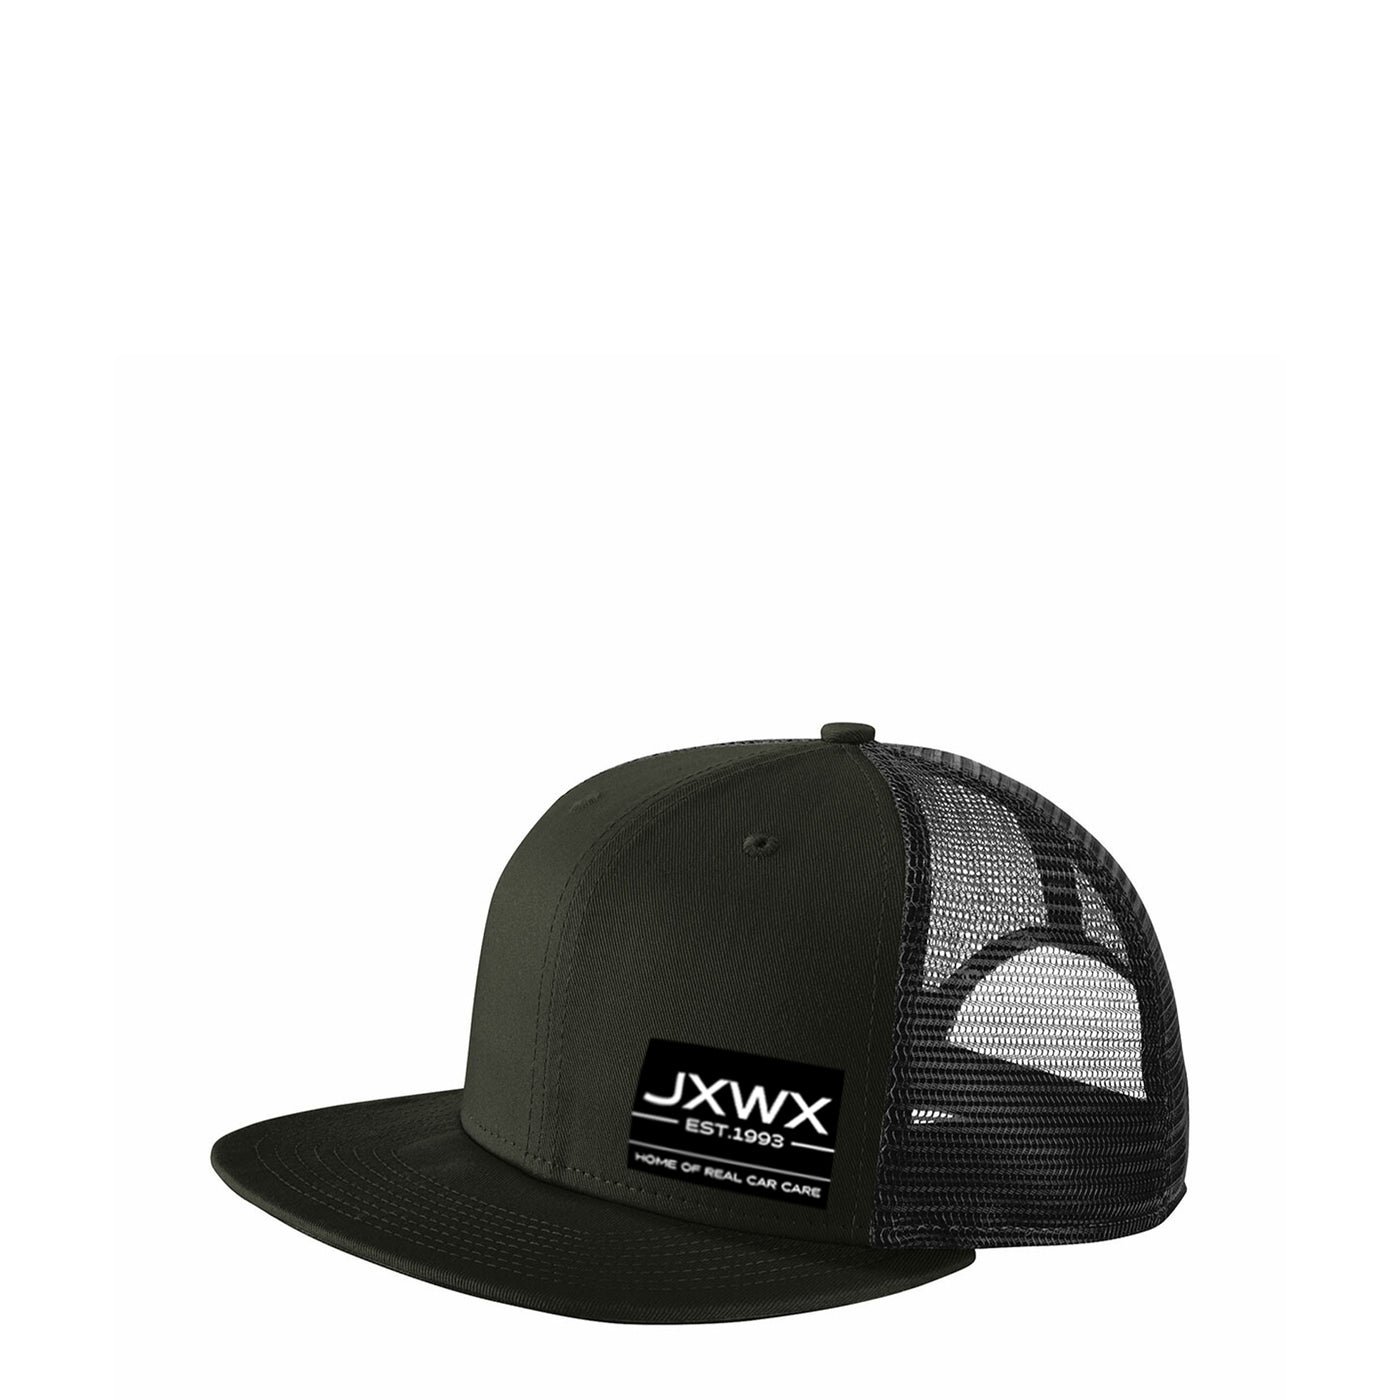 JAX WAX EXTERIOR DETAIL CAR CARE KIT (32 OUNCE) – Jax Wax of Arizona